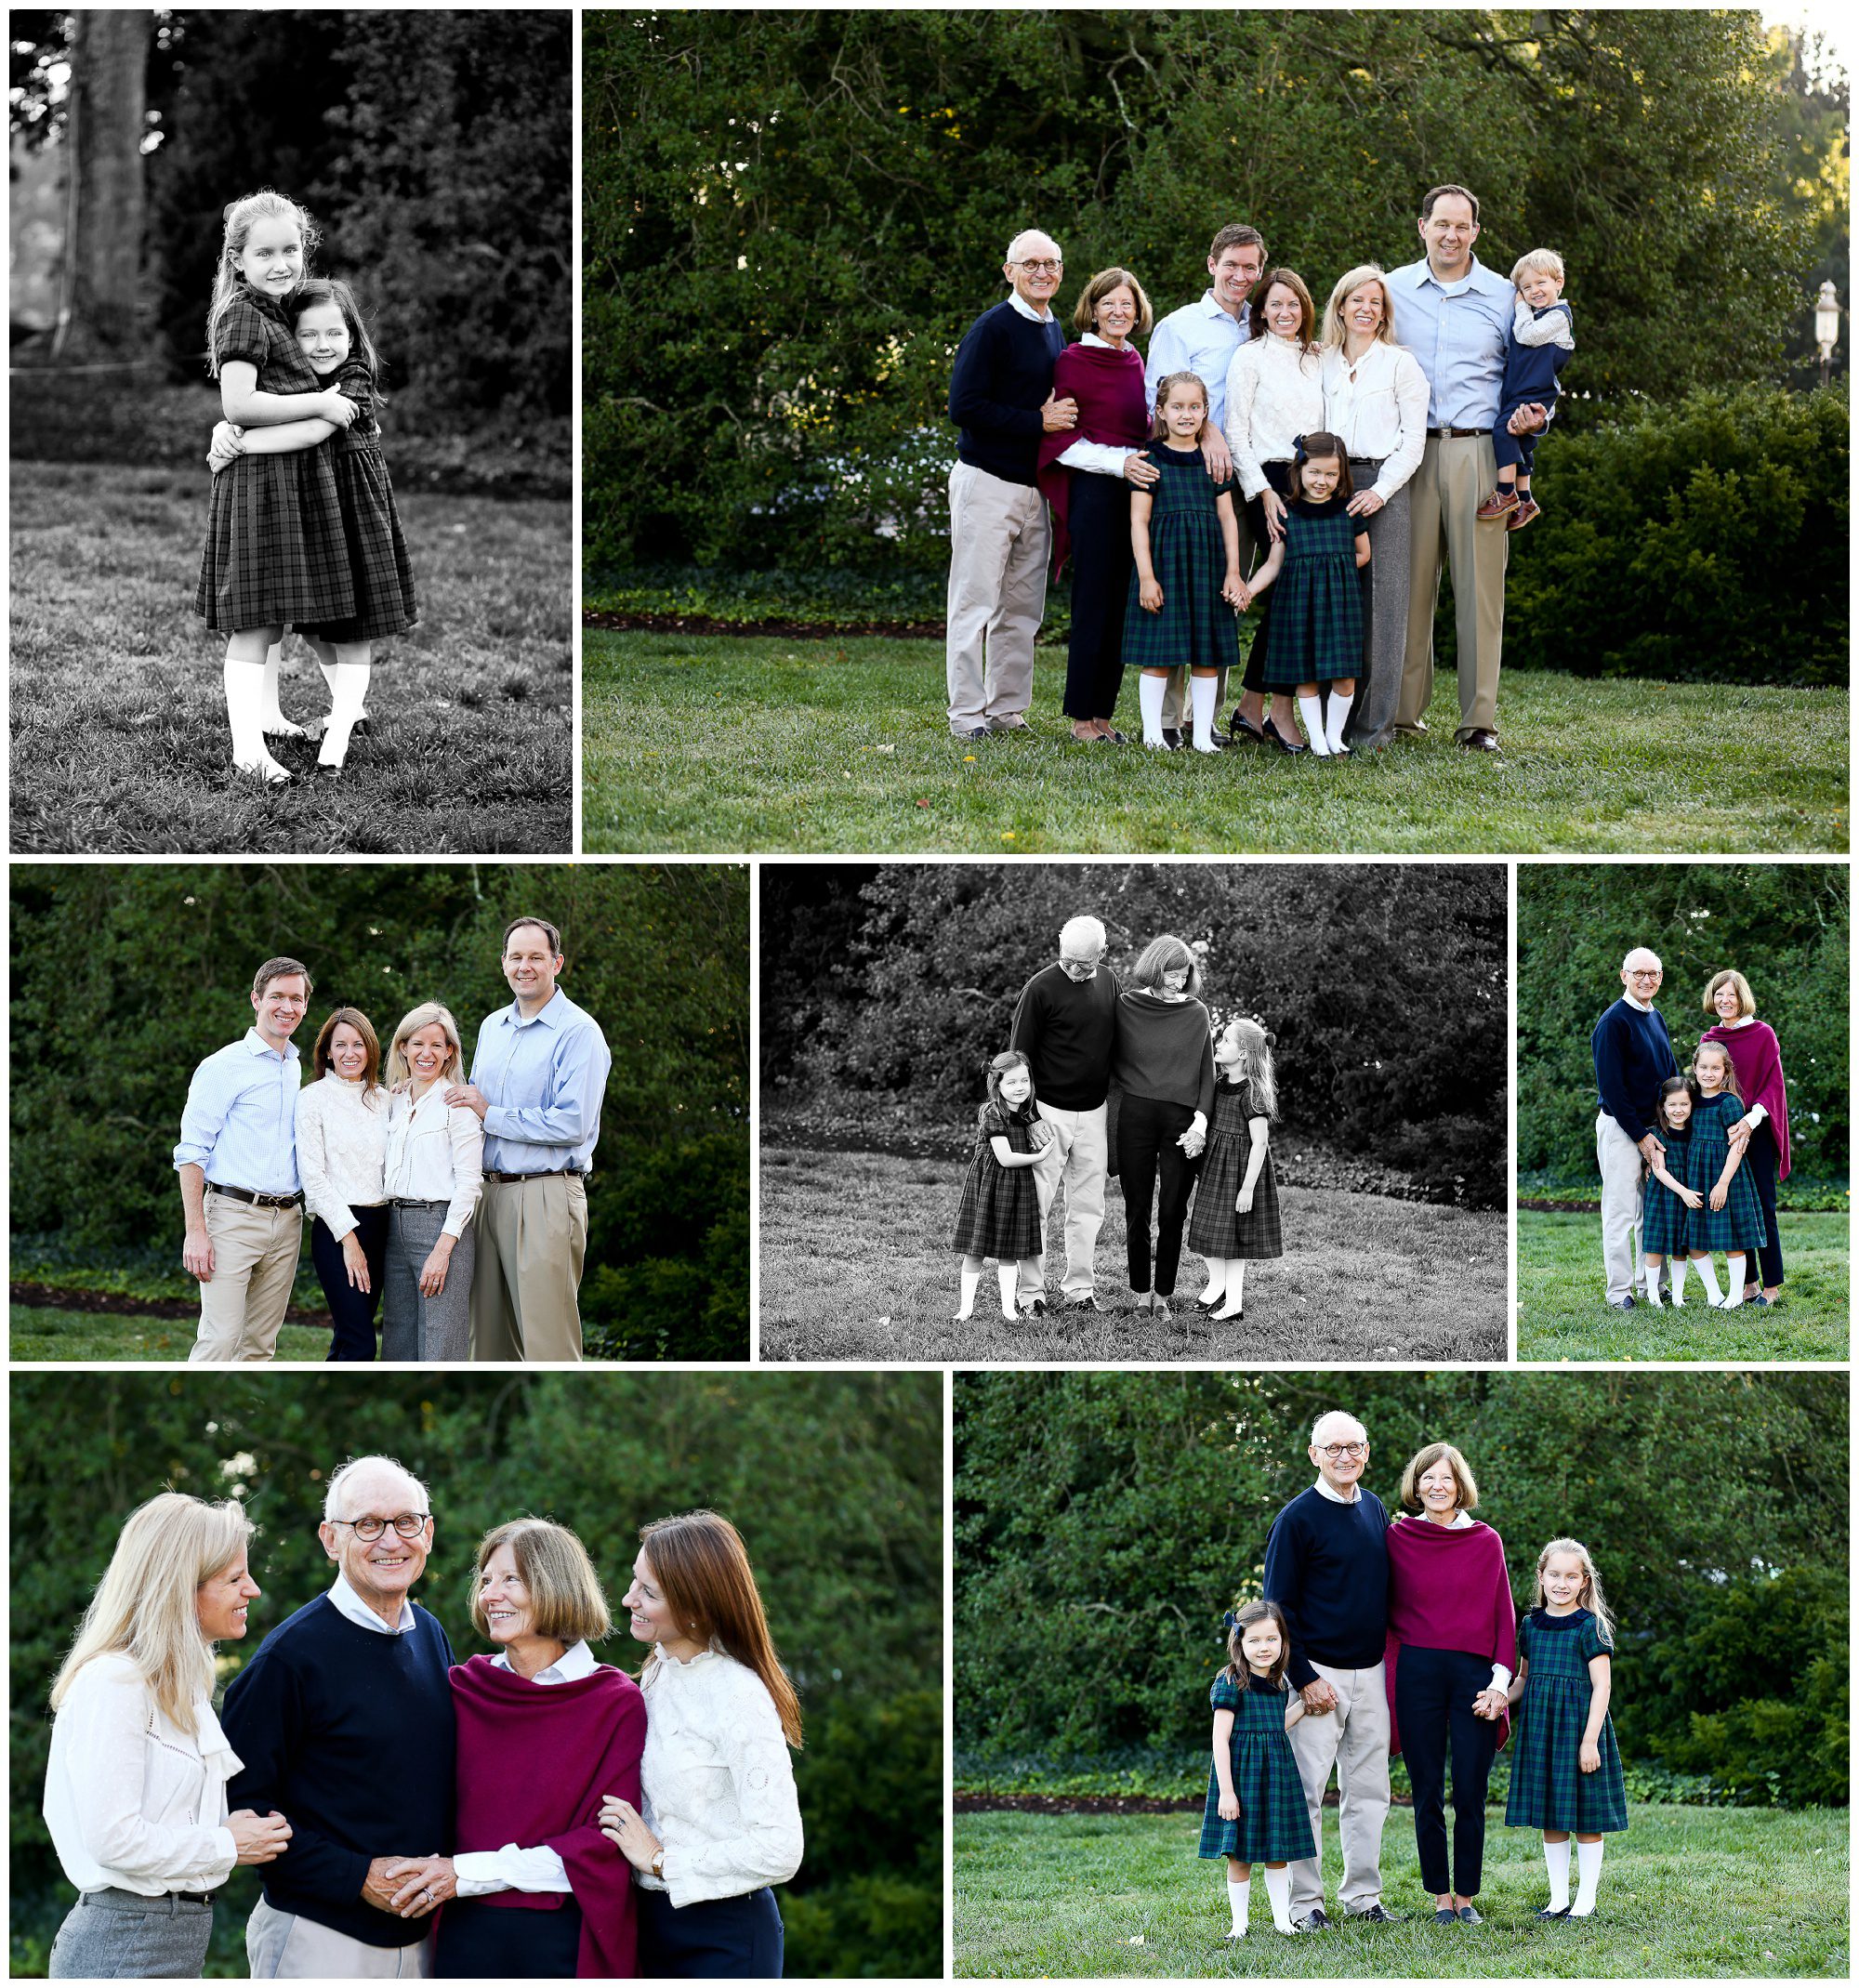 Richmond Extended Family Fall Portraits Charlottesville Farmington County Club  grandchildren grandparents generations photographer